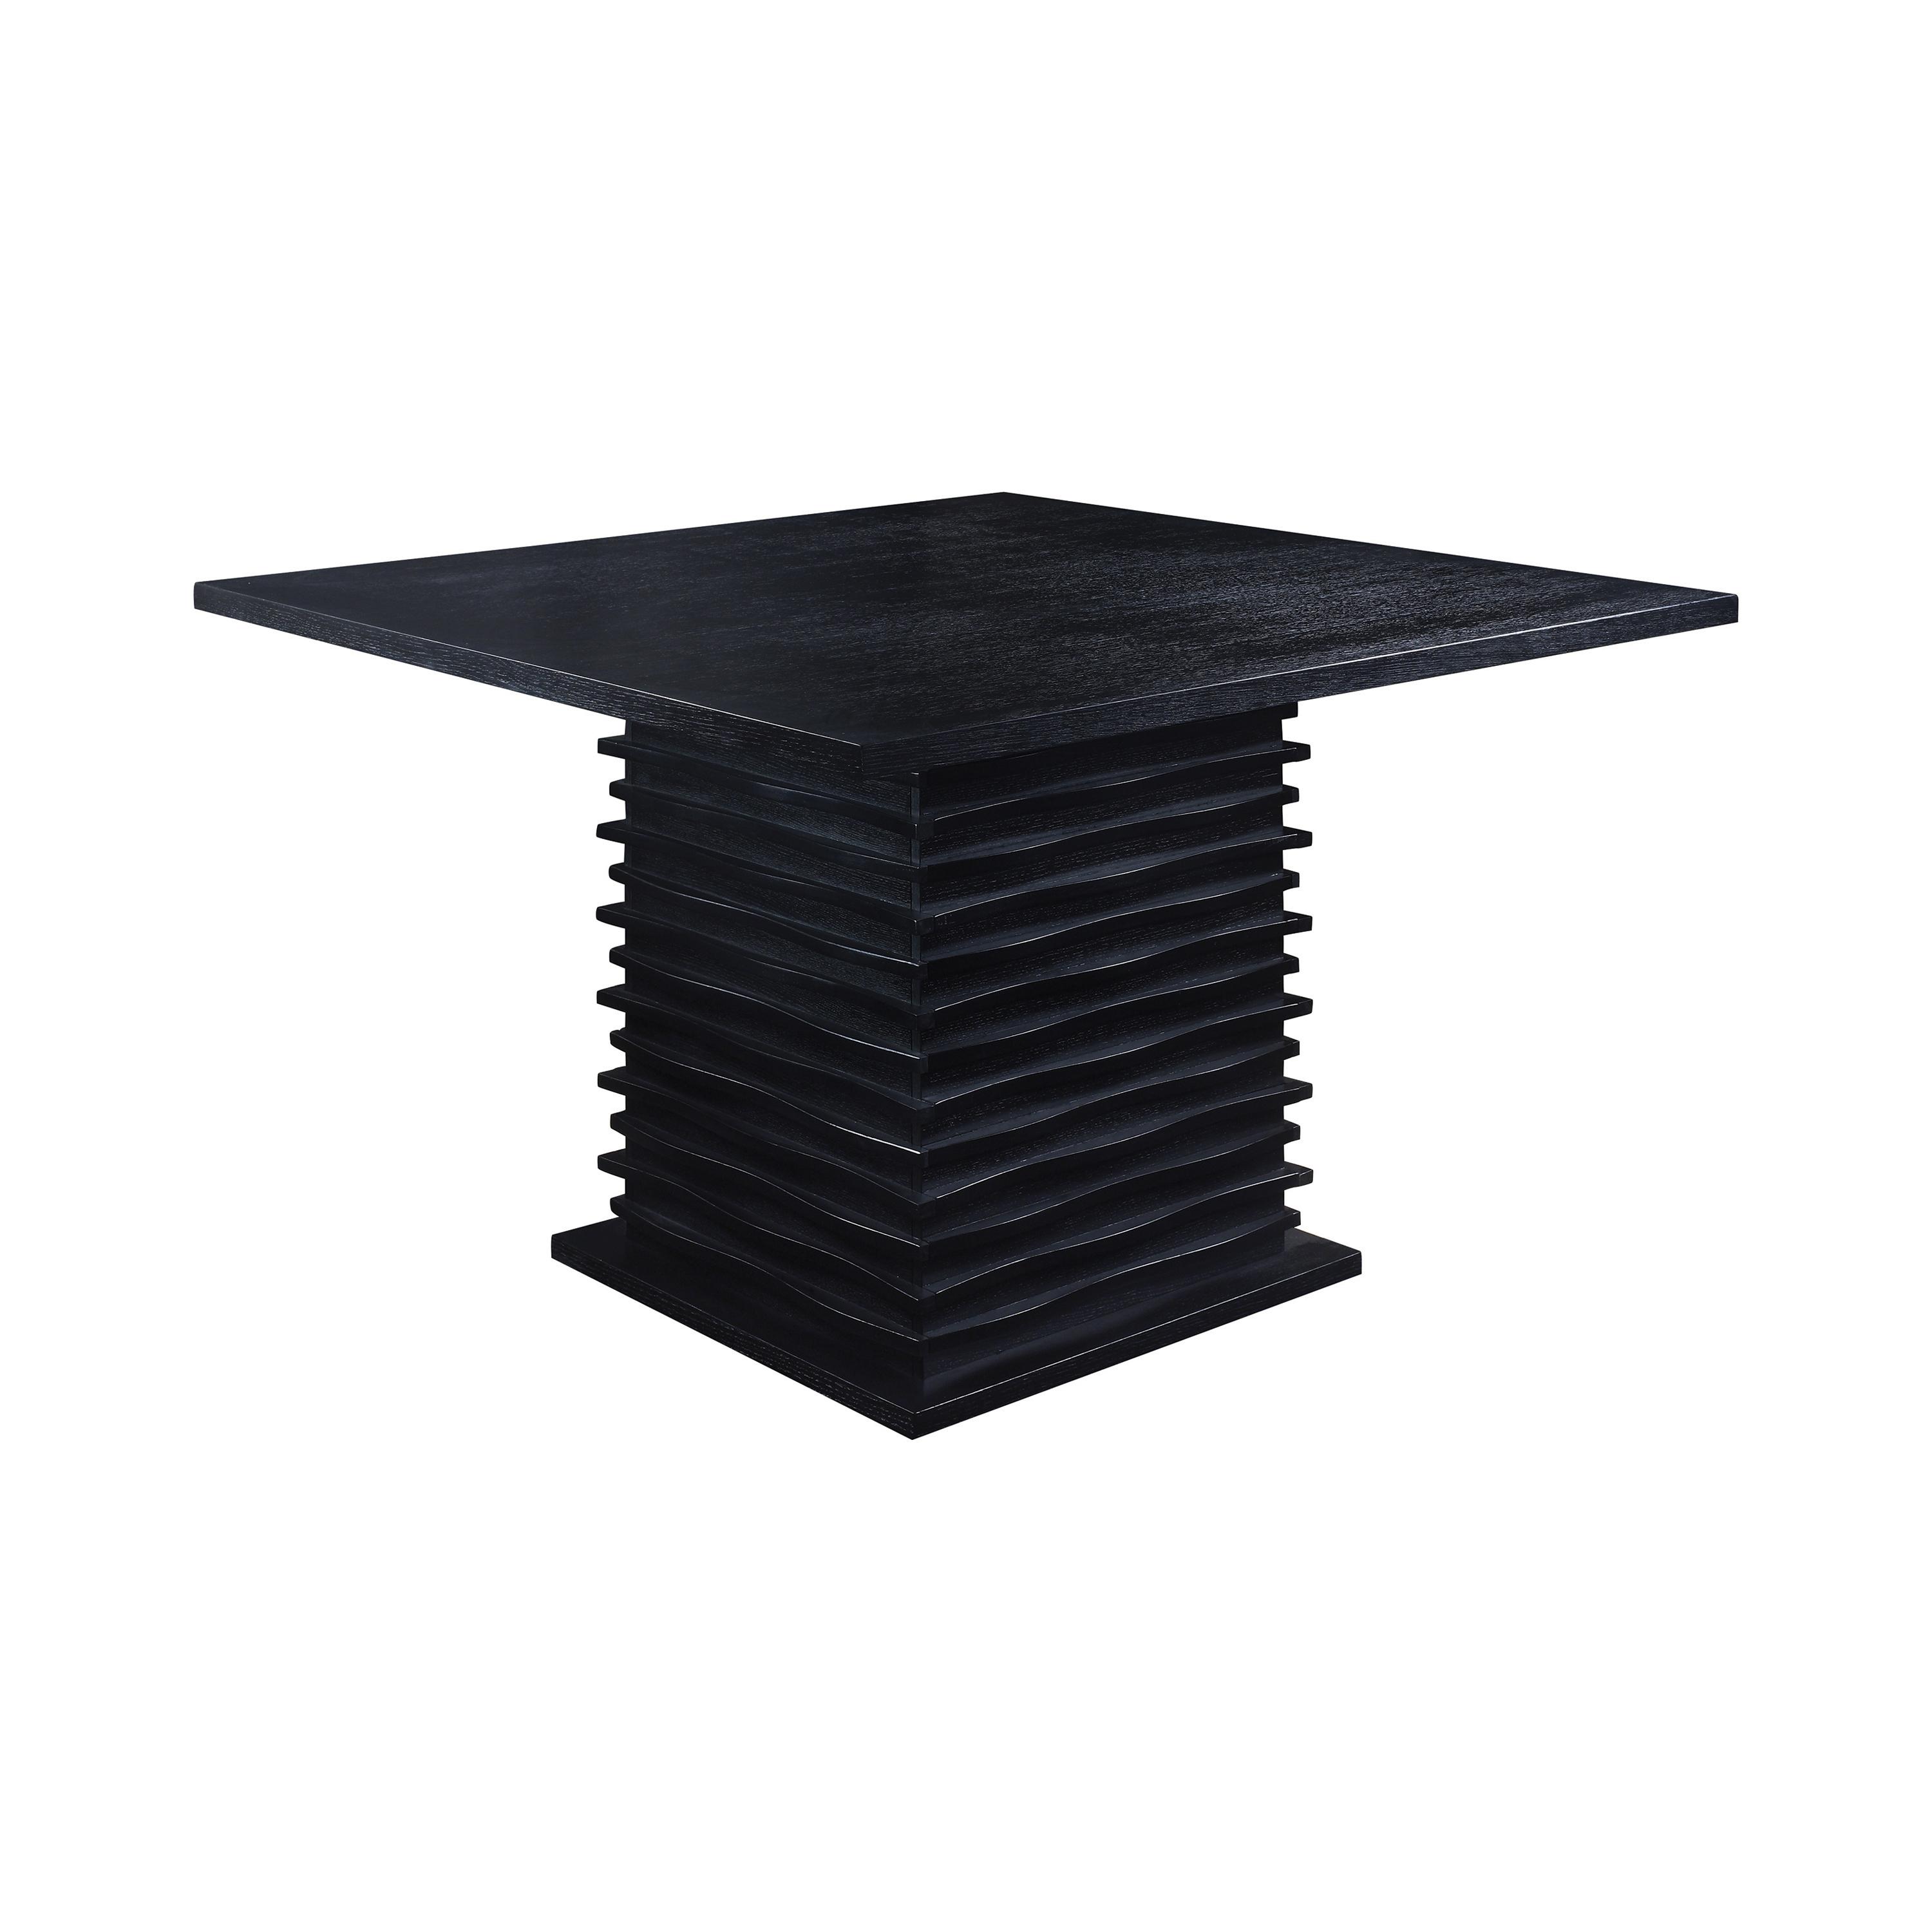 

    
Modern Black & Gray Solid Wood Dining Room Set 9pcs Coaster 102068-S9 Stanton
